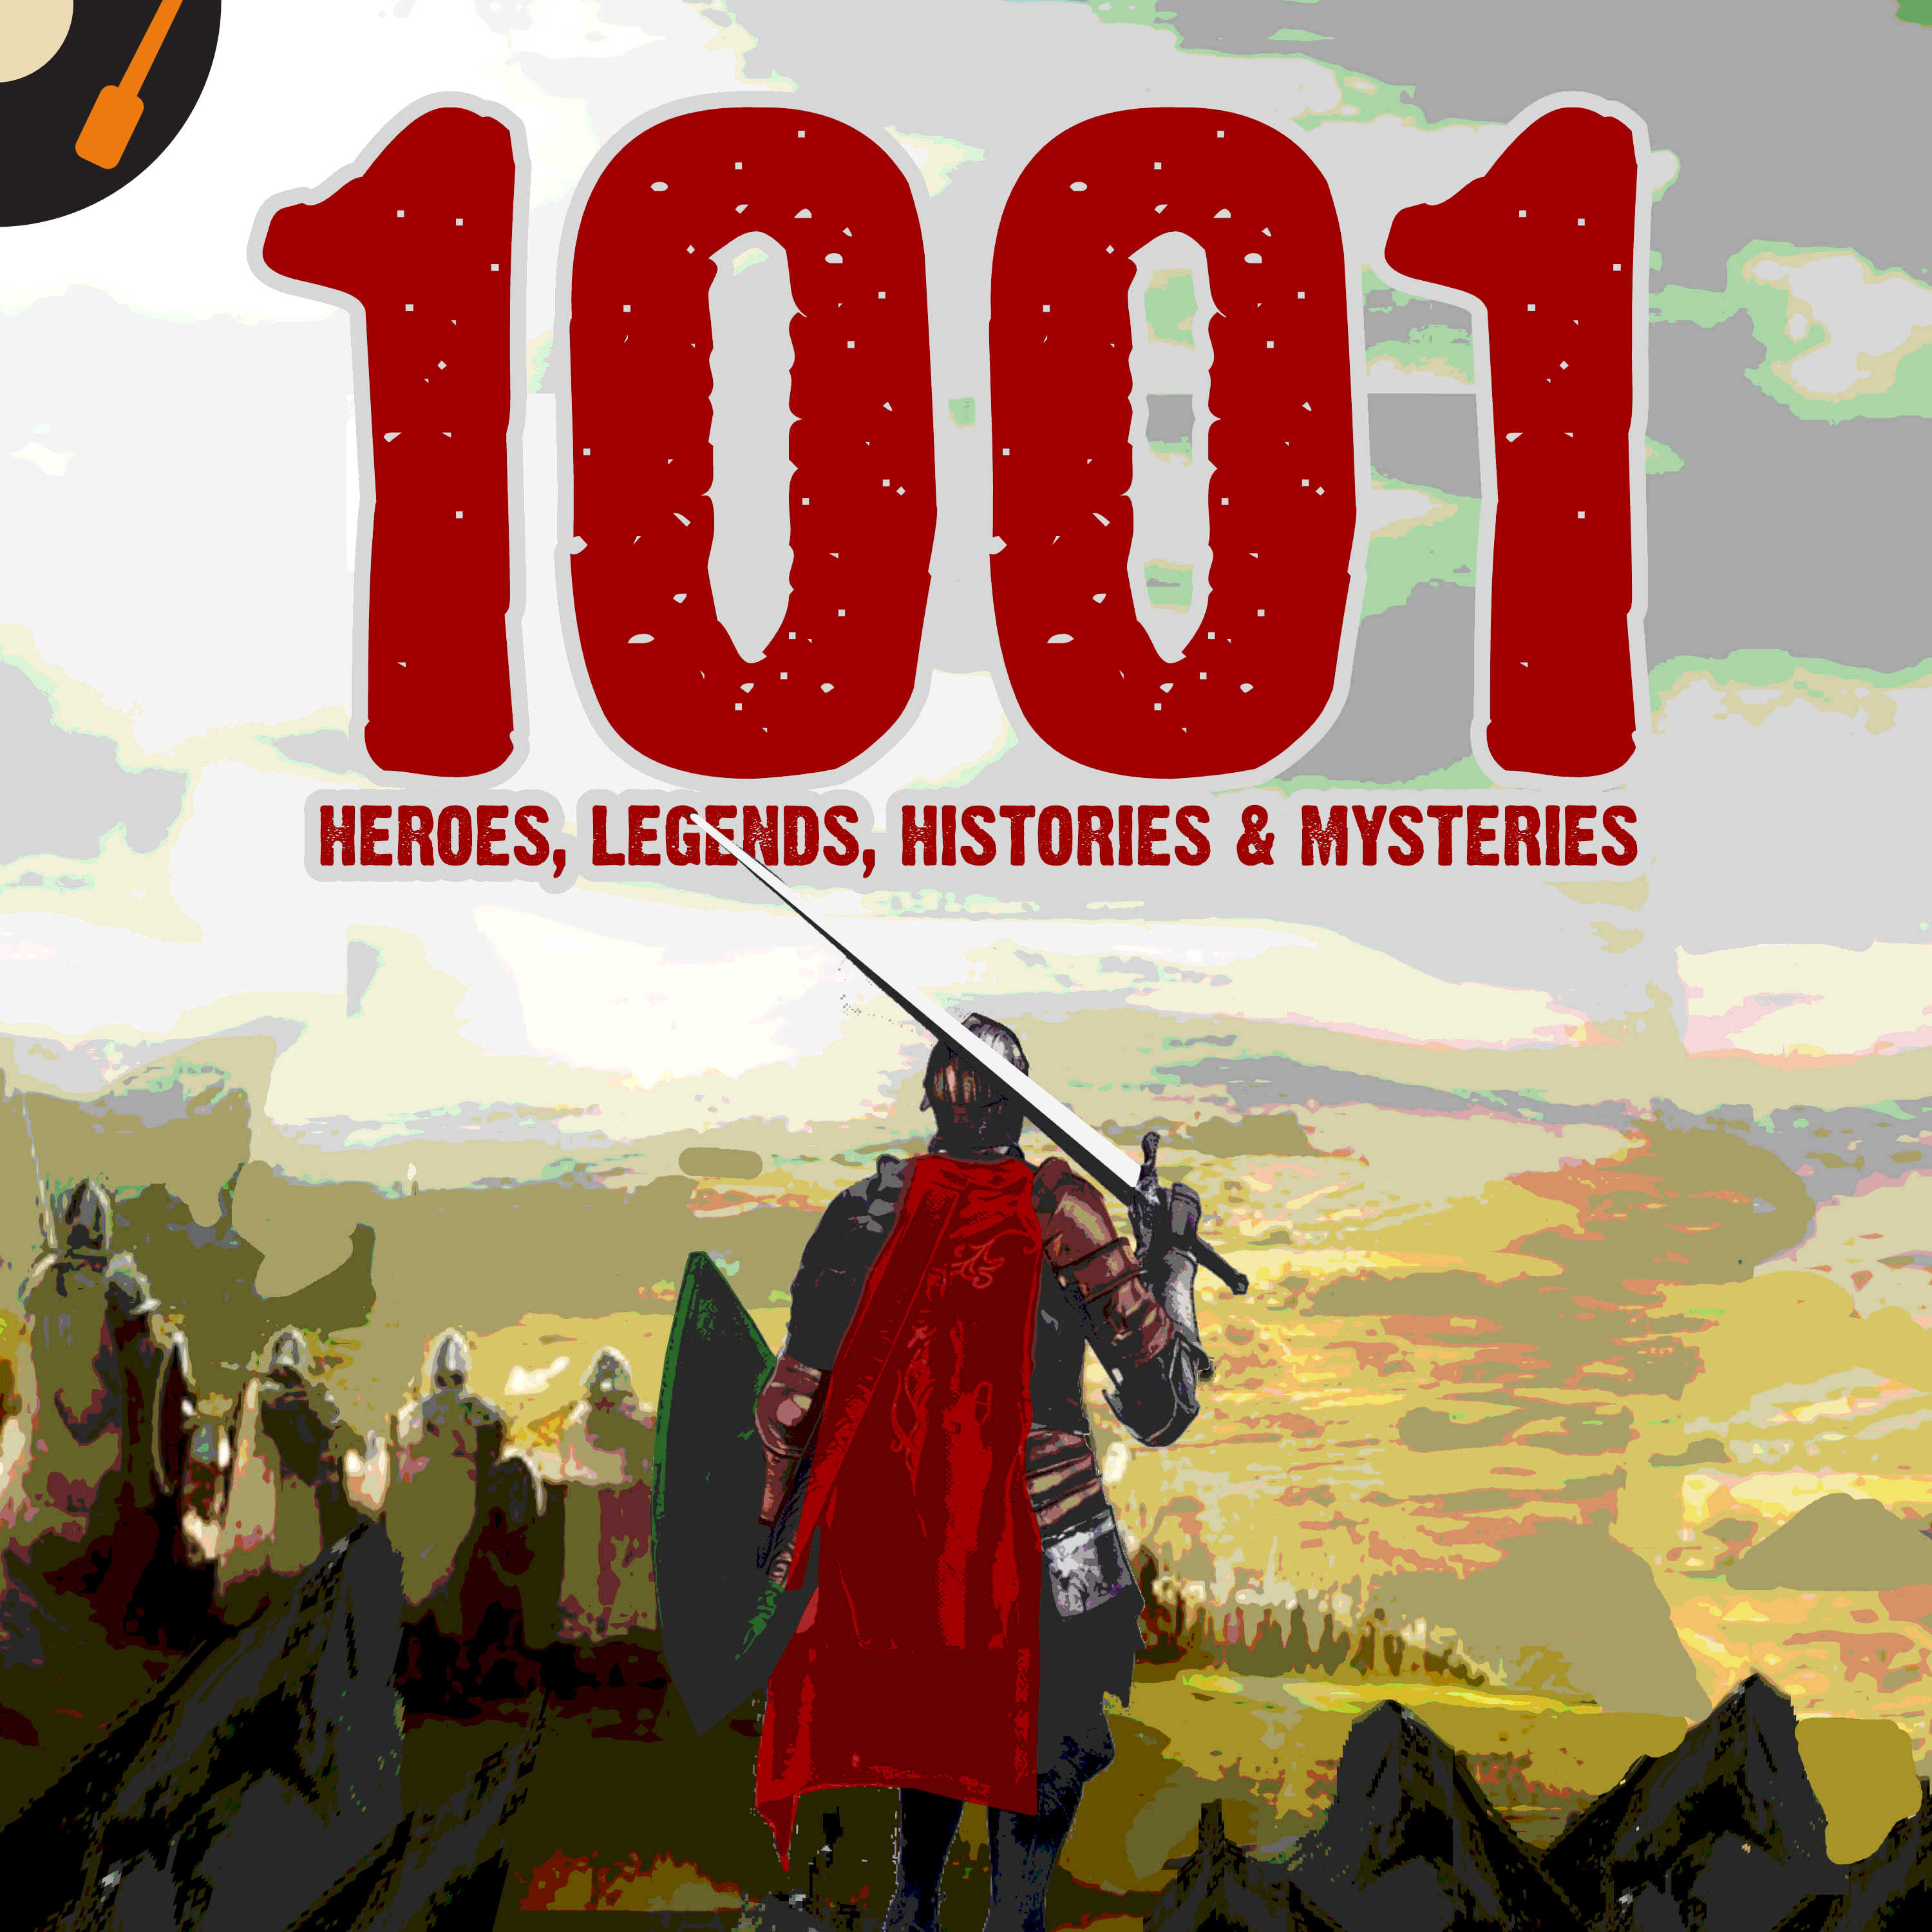 1001 Heroes, Legends, Histories & Mysteries Podcast:Jon Hagadorn  Podcast Host